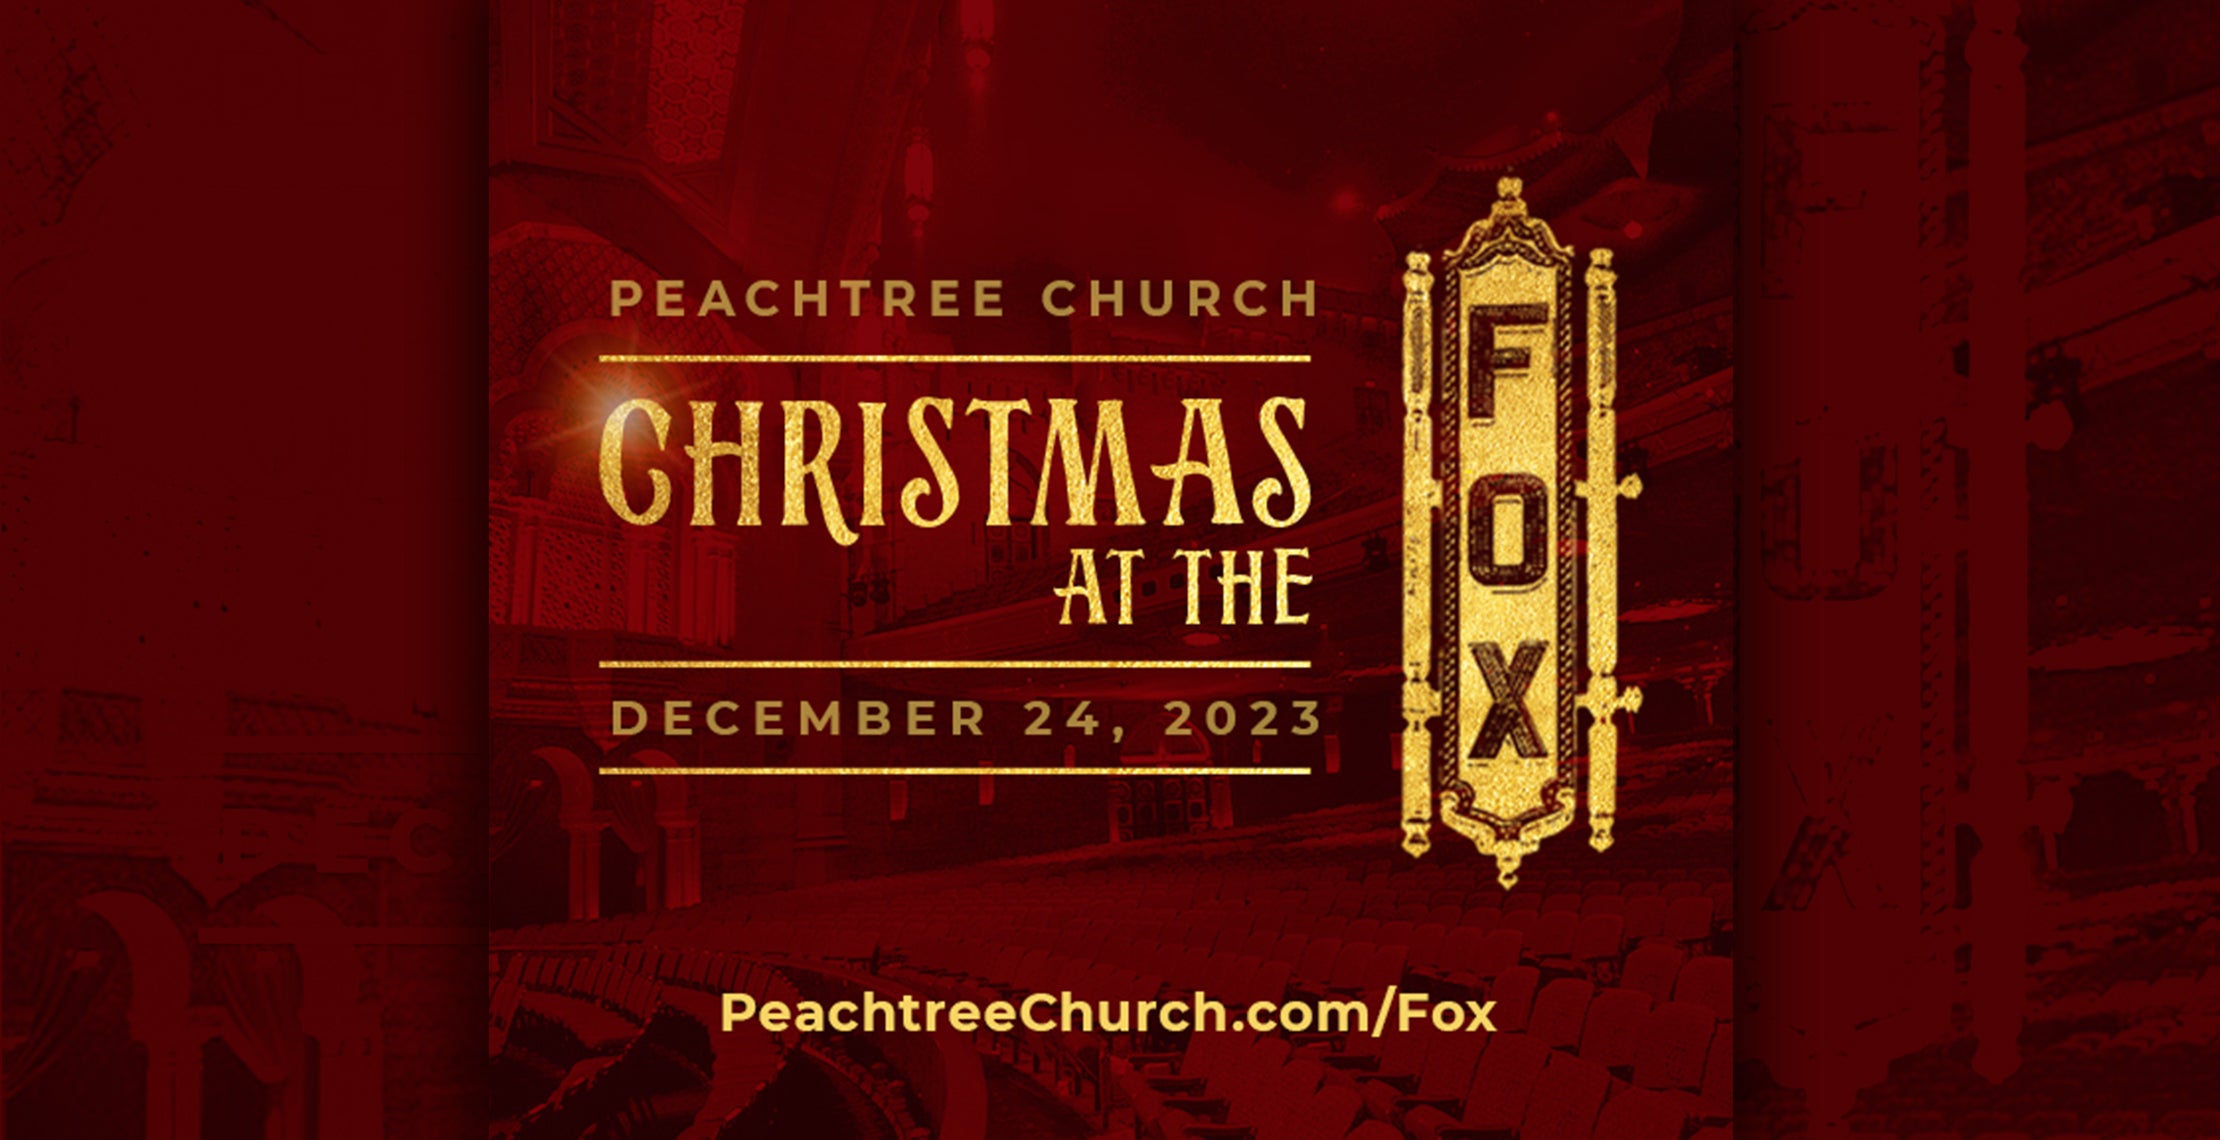 PEACHTREE CHURCH: CHRISTMAS AT THE FOX